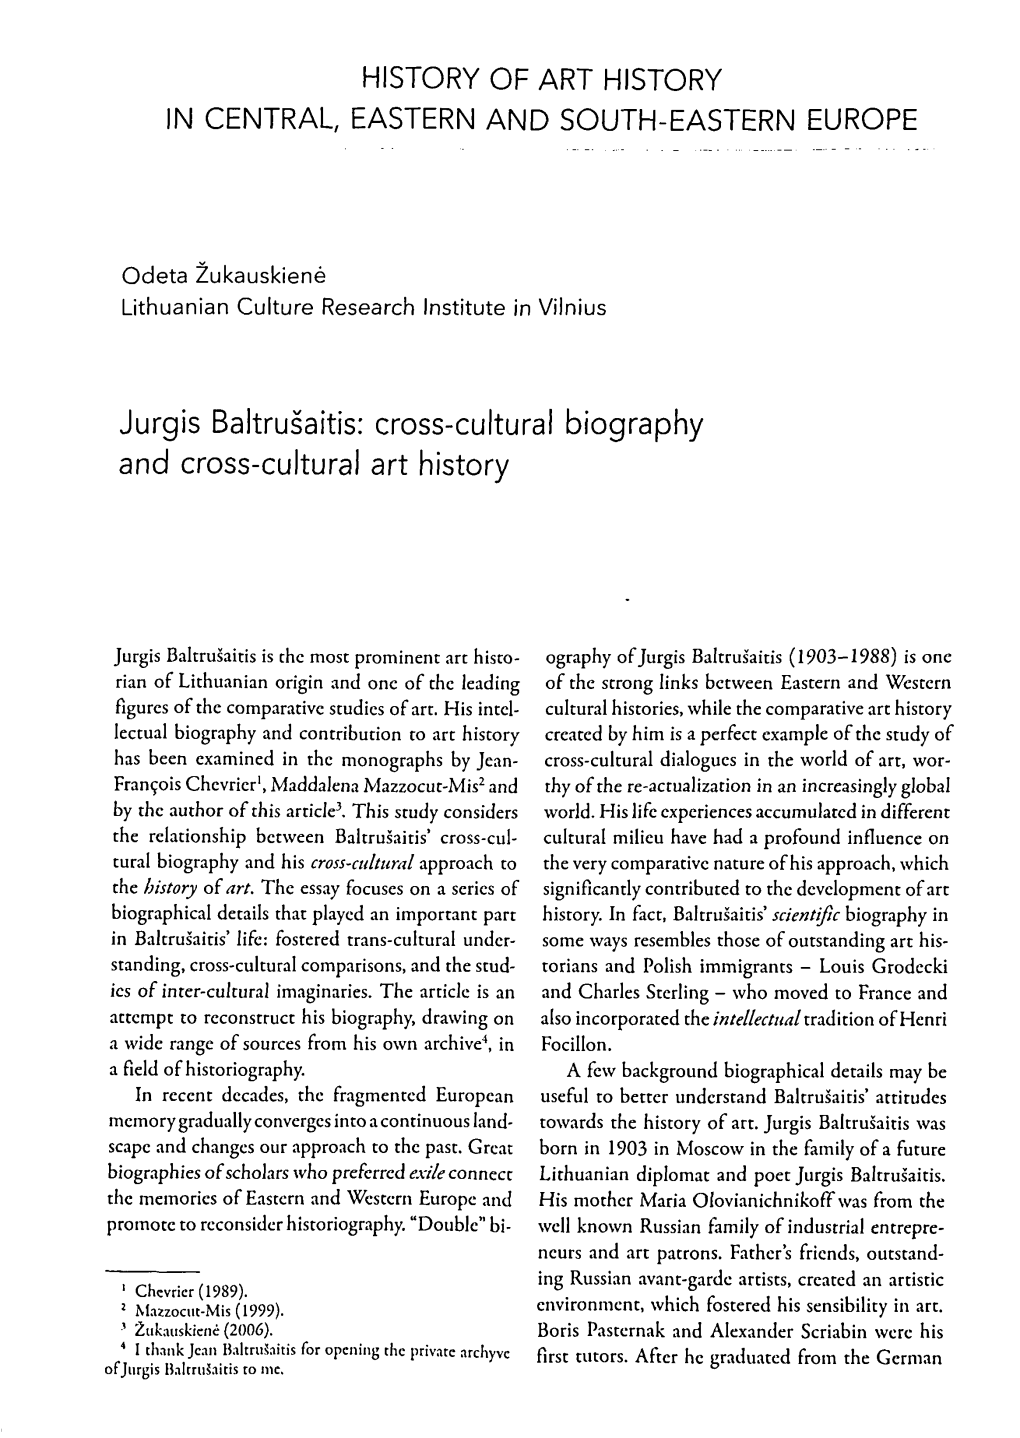 Jurgis Baltrušaitis: Cross-Cultural Biography and Cross-Cultural Art History